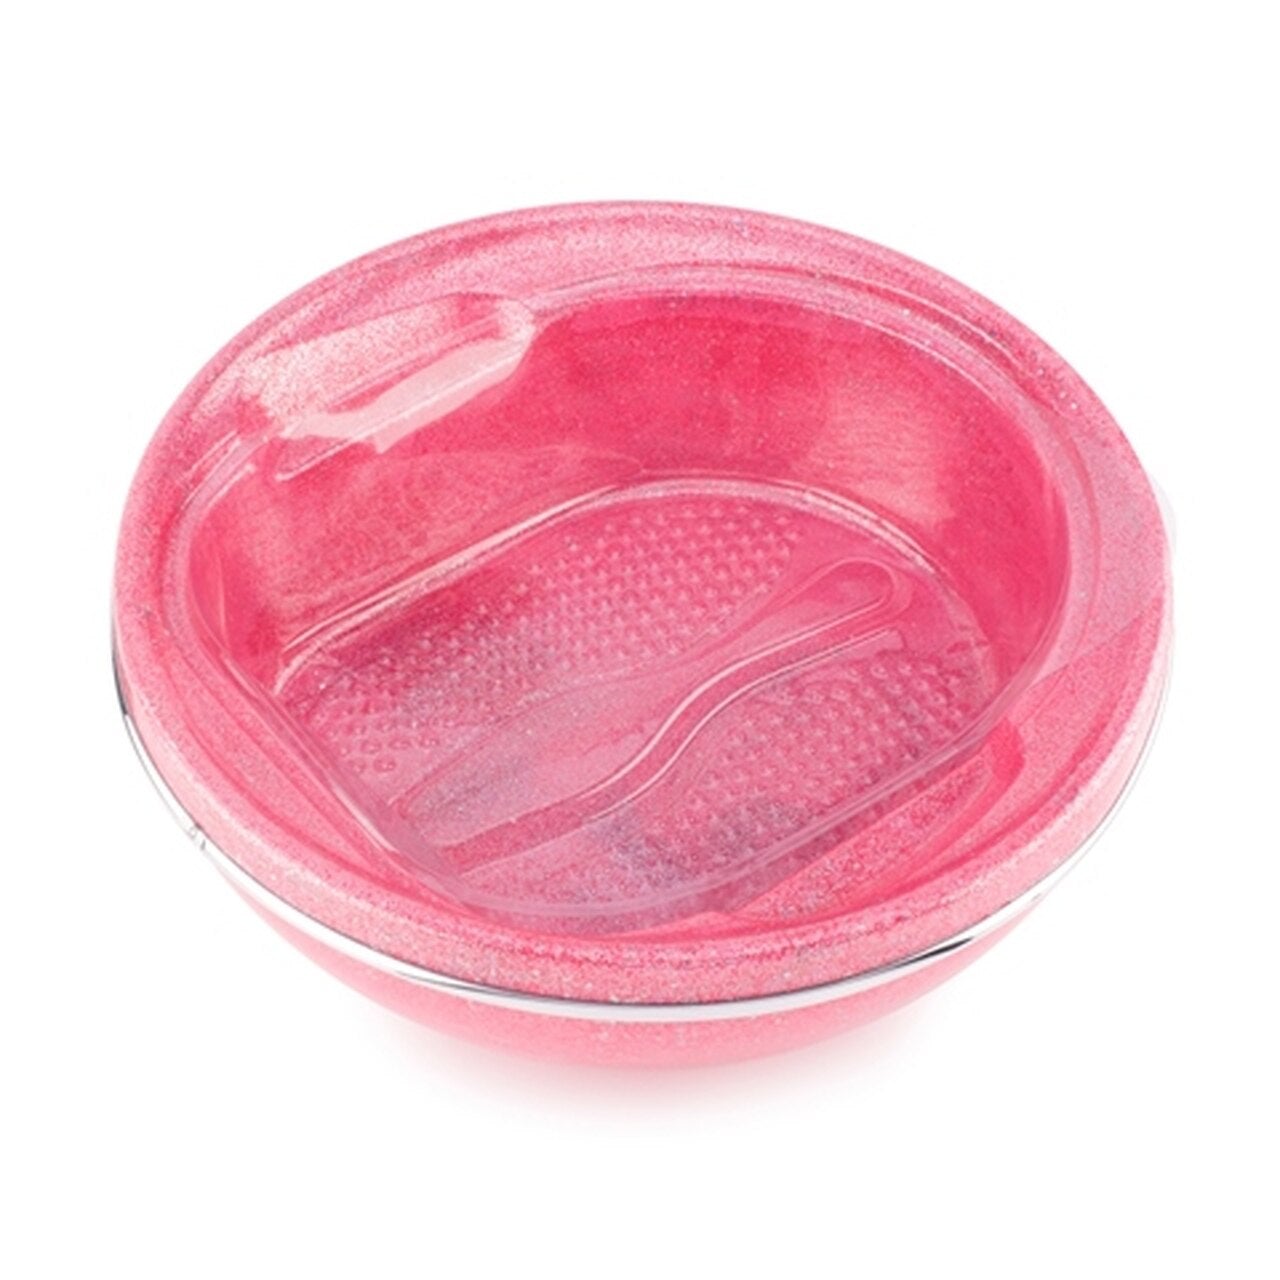 Belava Glitter Pedicure Bowl - Pink